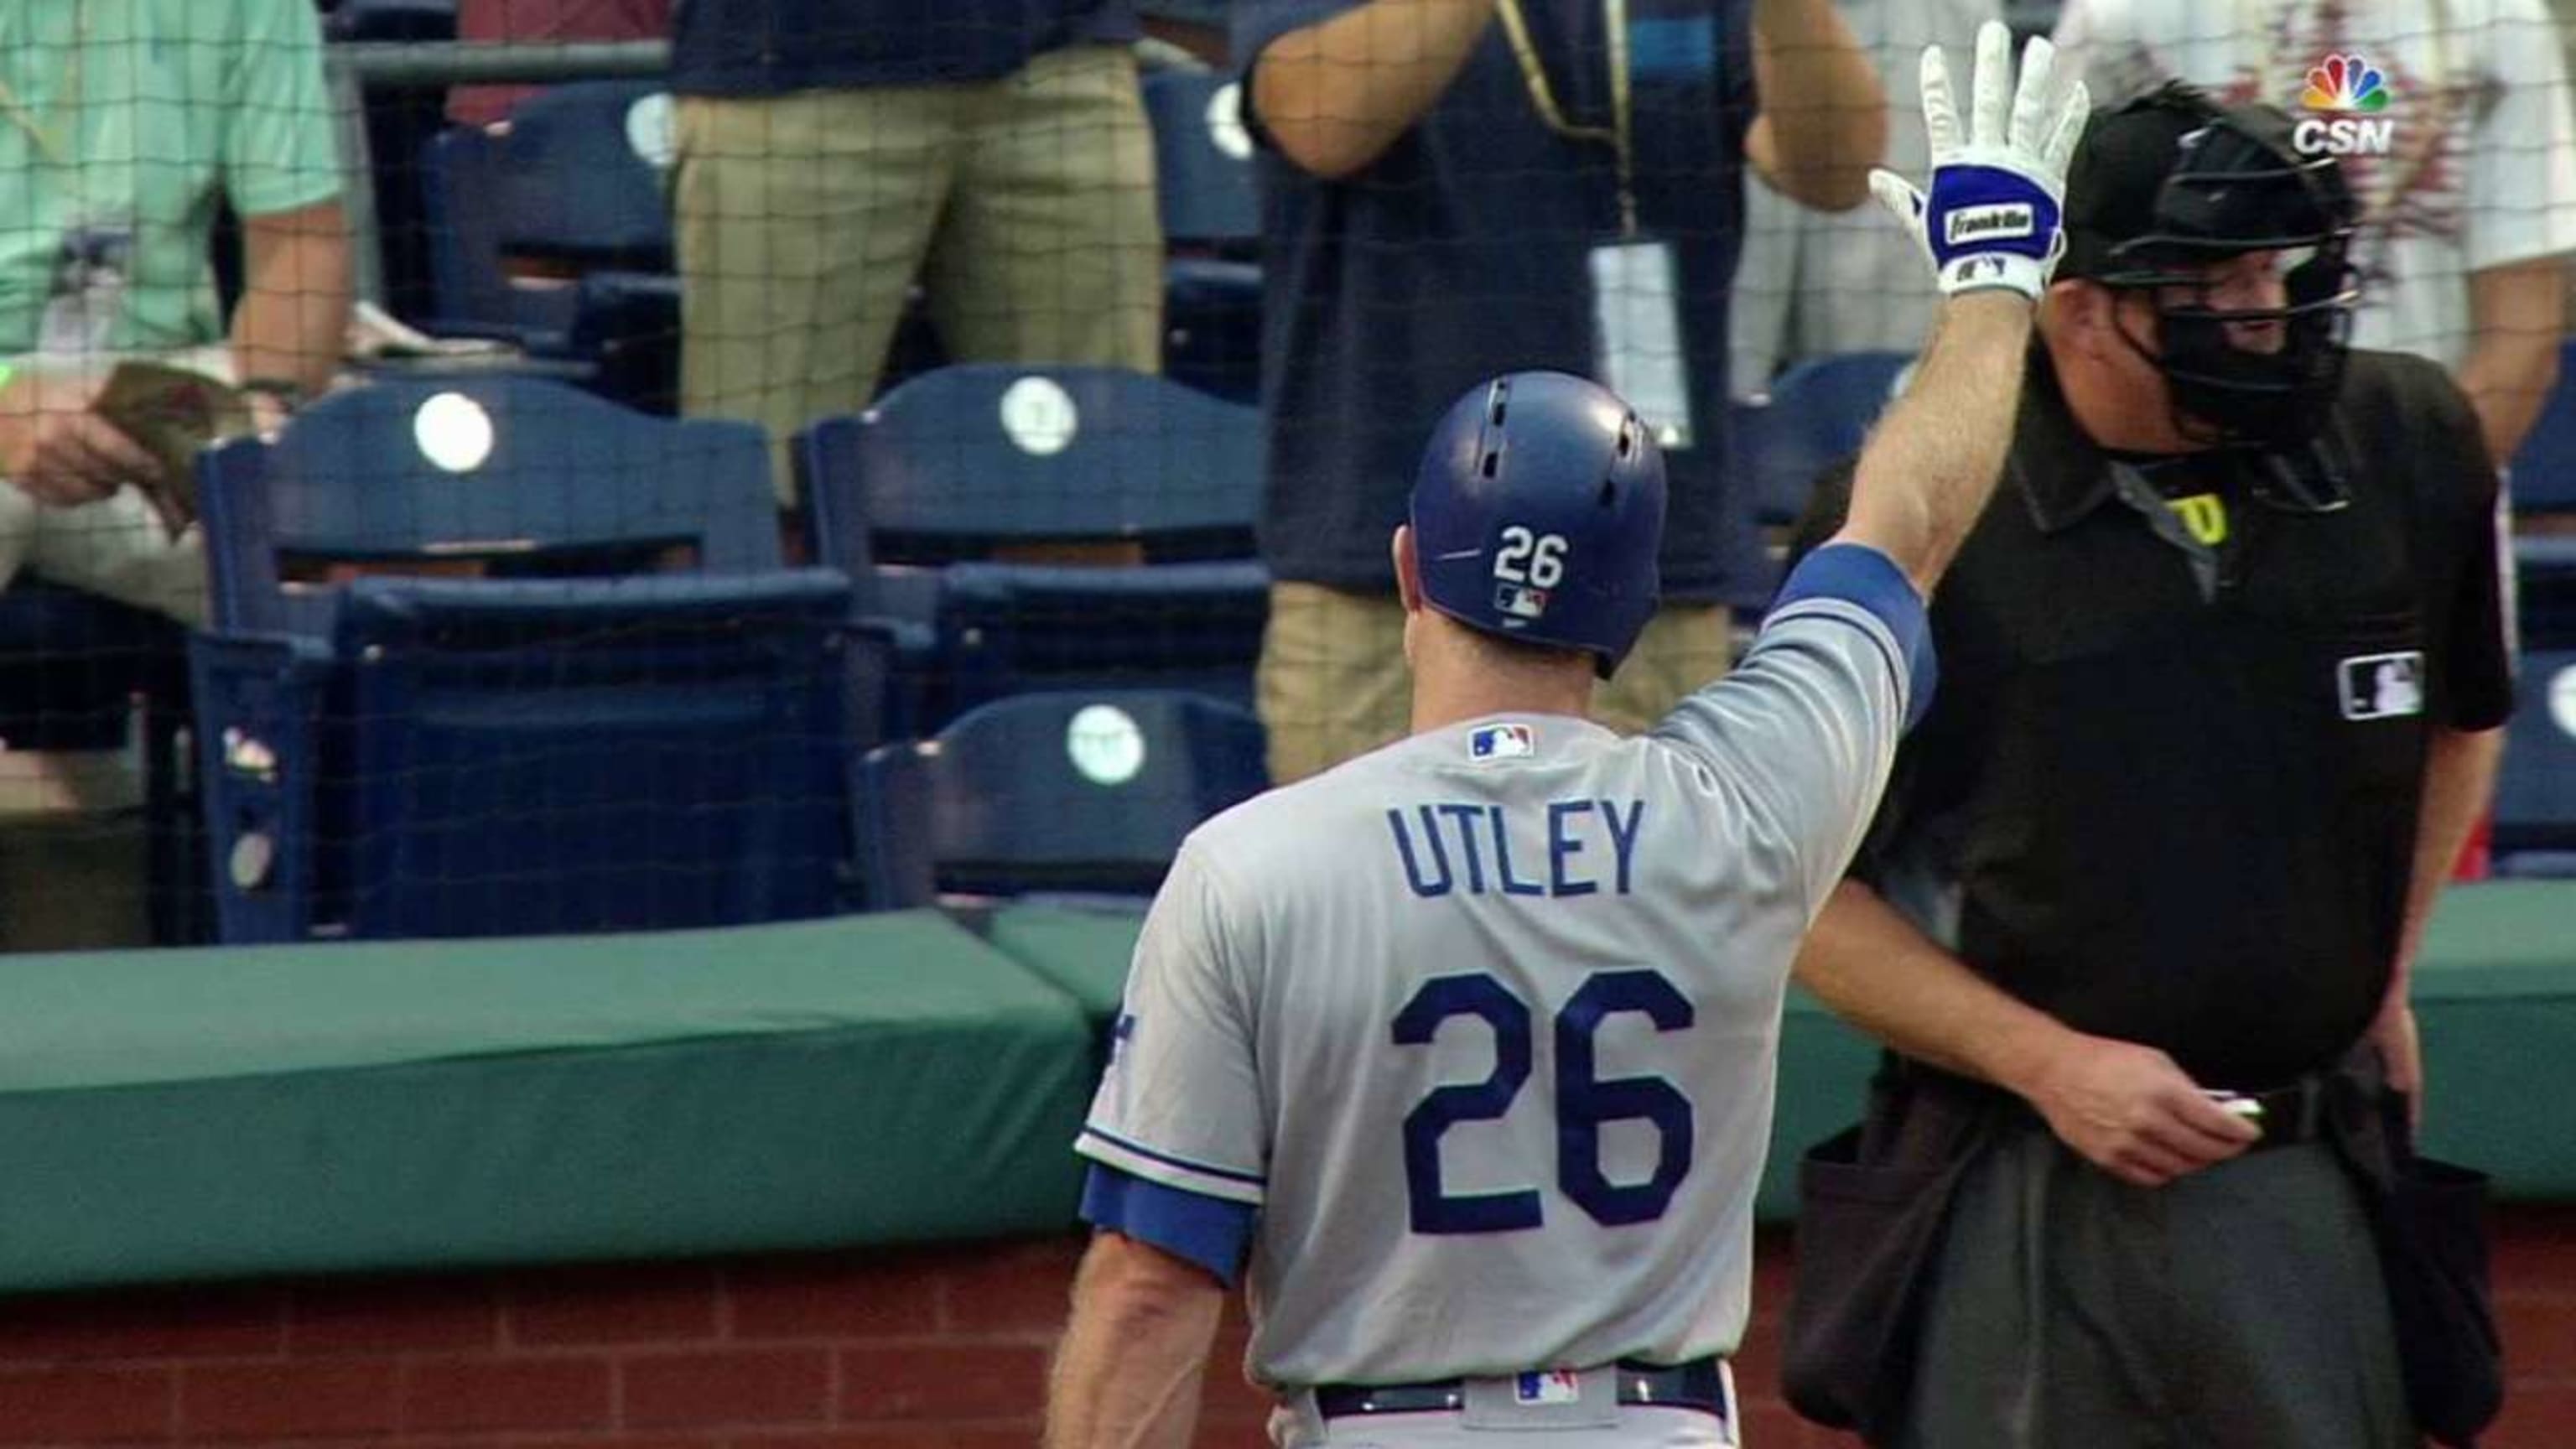 Former Philadelphia Phillie Chase Utley says goodbye to baseball